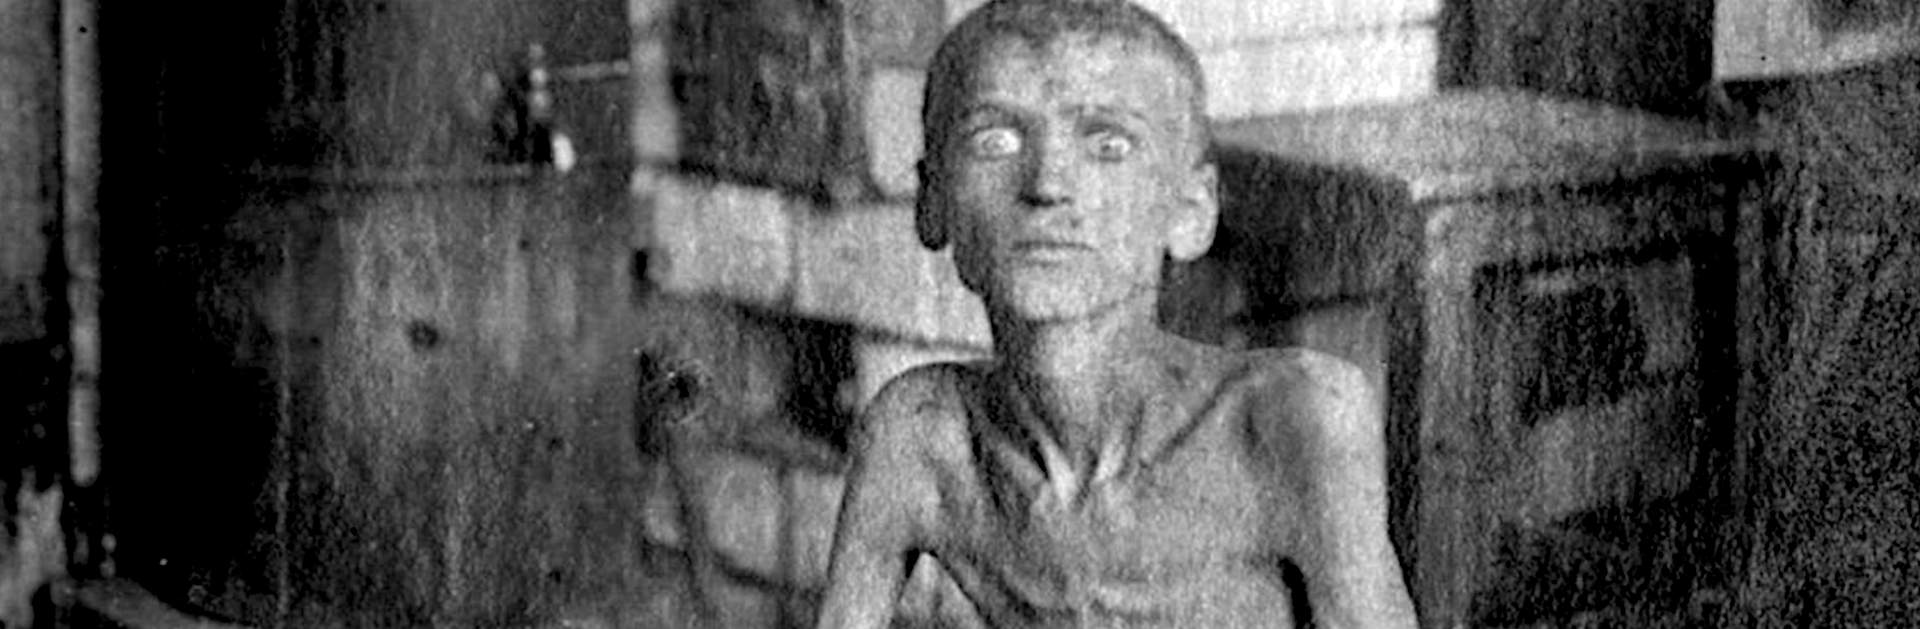 Holodomor Victim